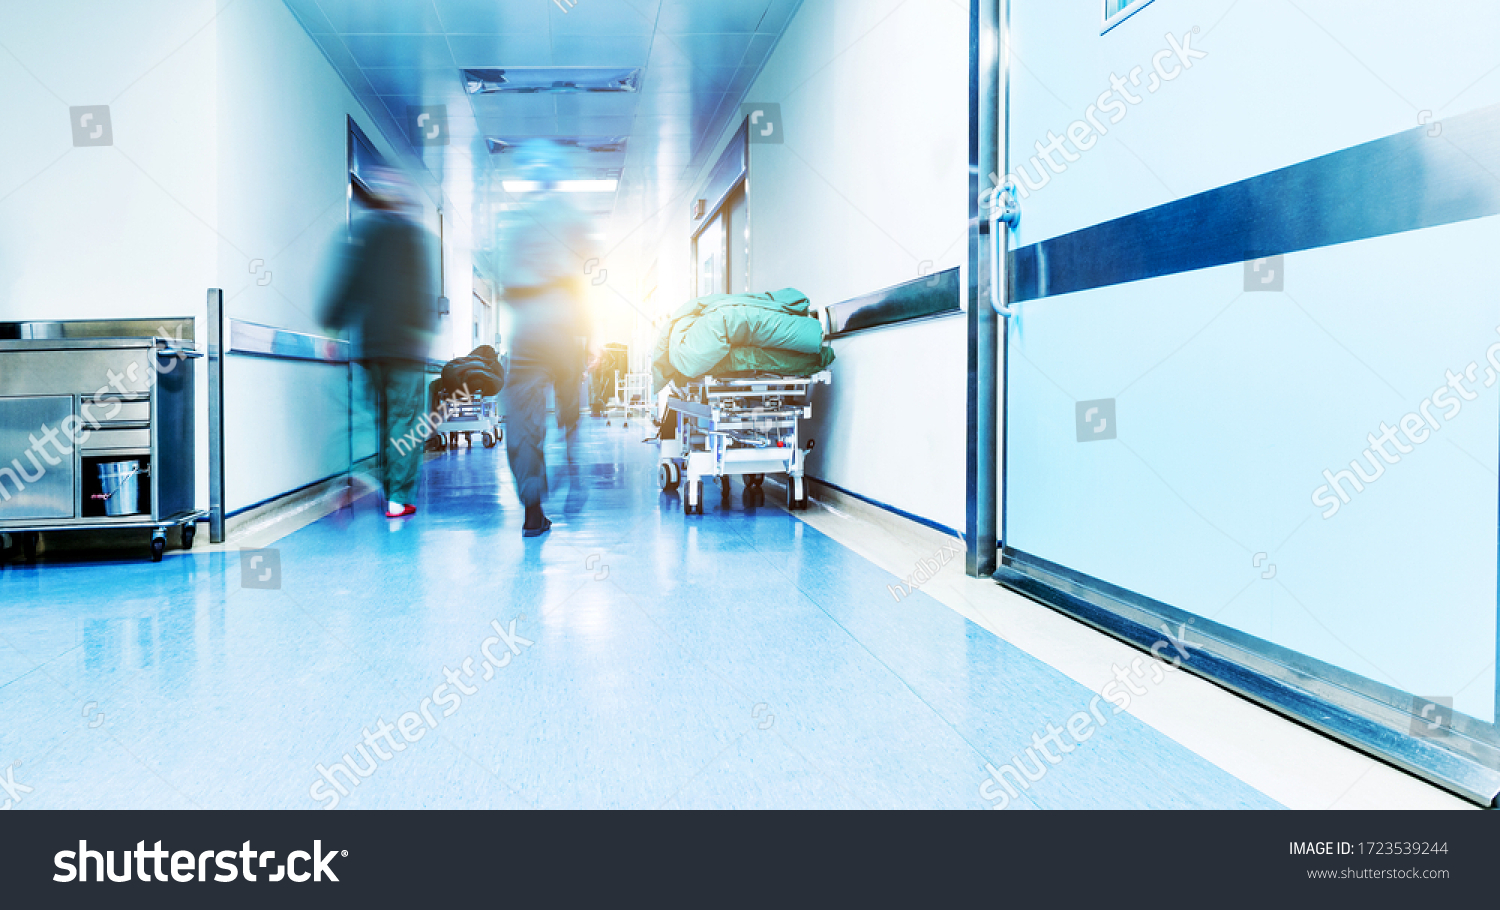 Doctors or nurses walking in hospital hallway, blurred motion. #1723539244